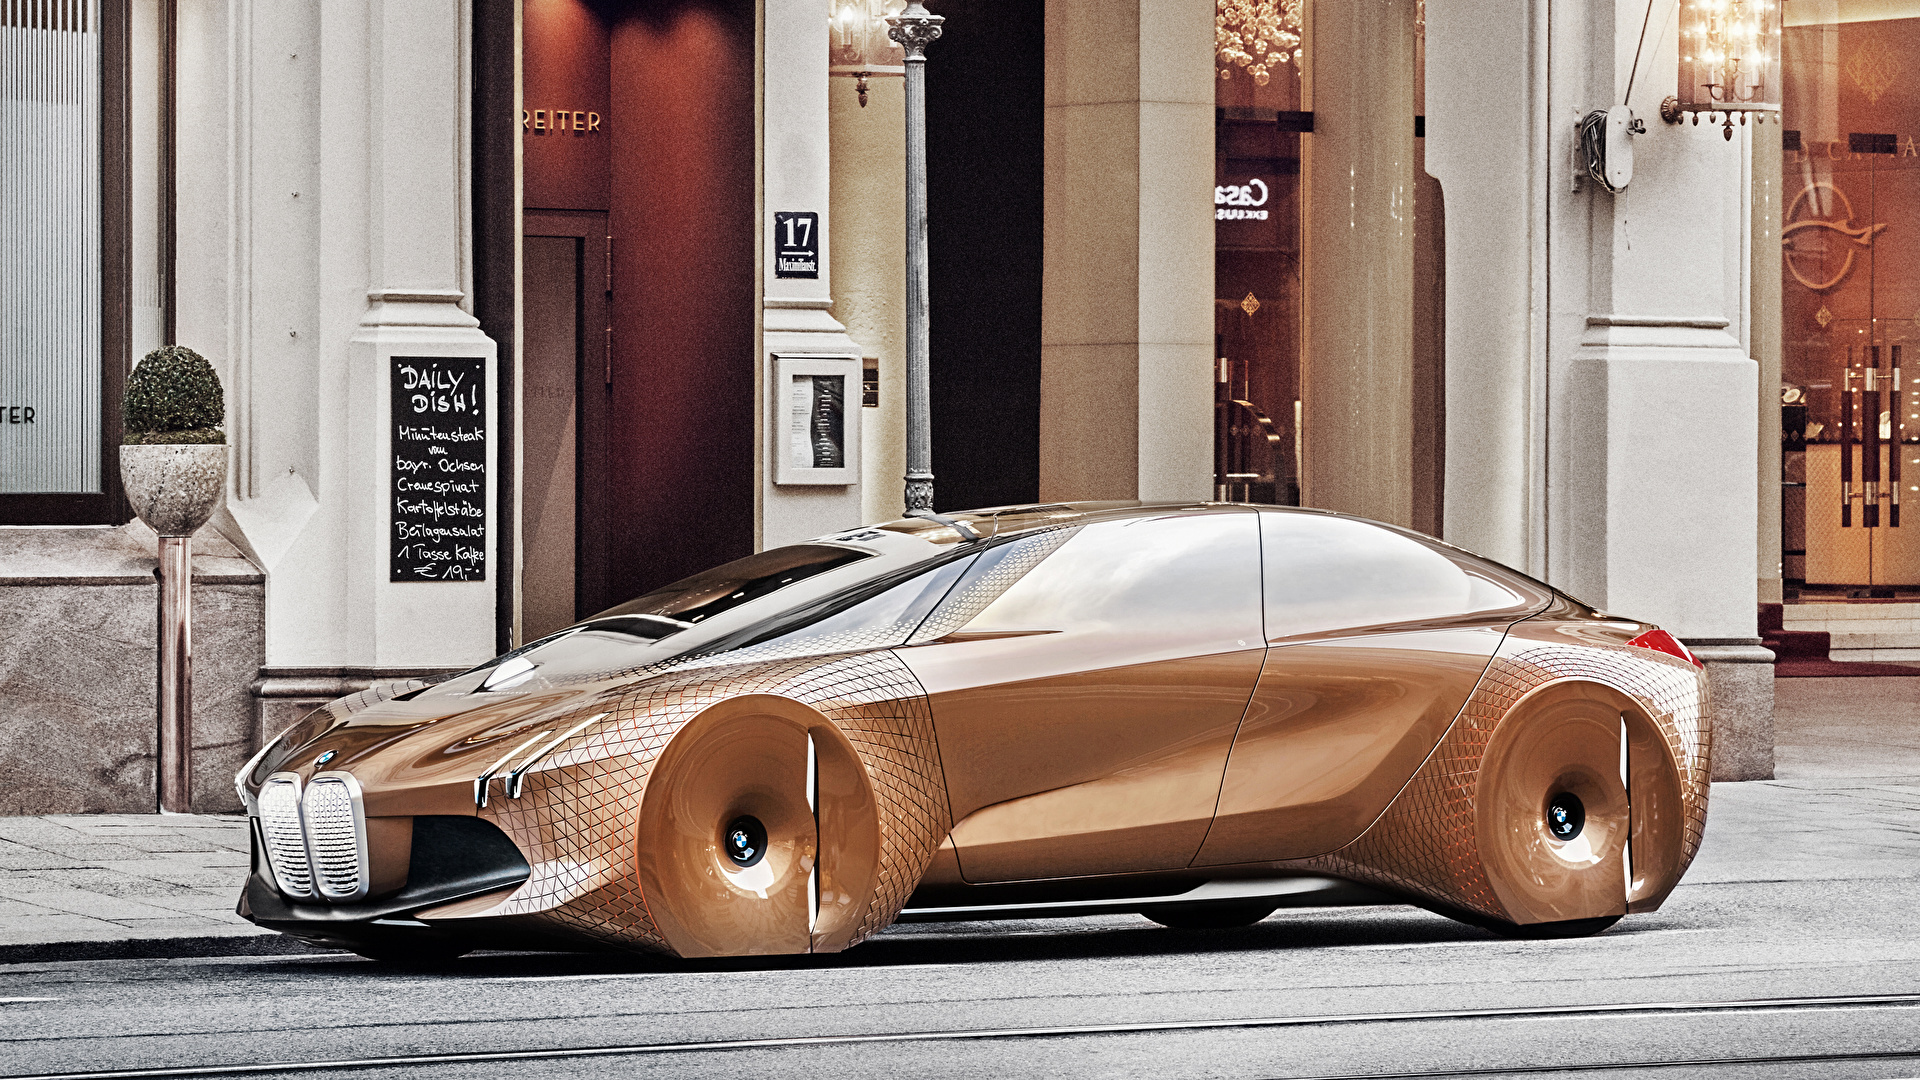 HD wallpaper: BMW Vision Next 100, future cars, supercars | Wallpaper Flare